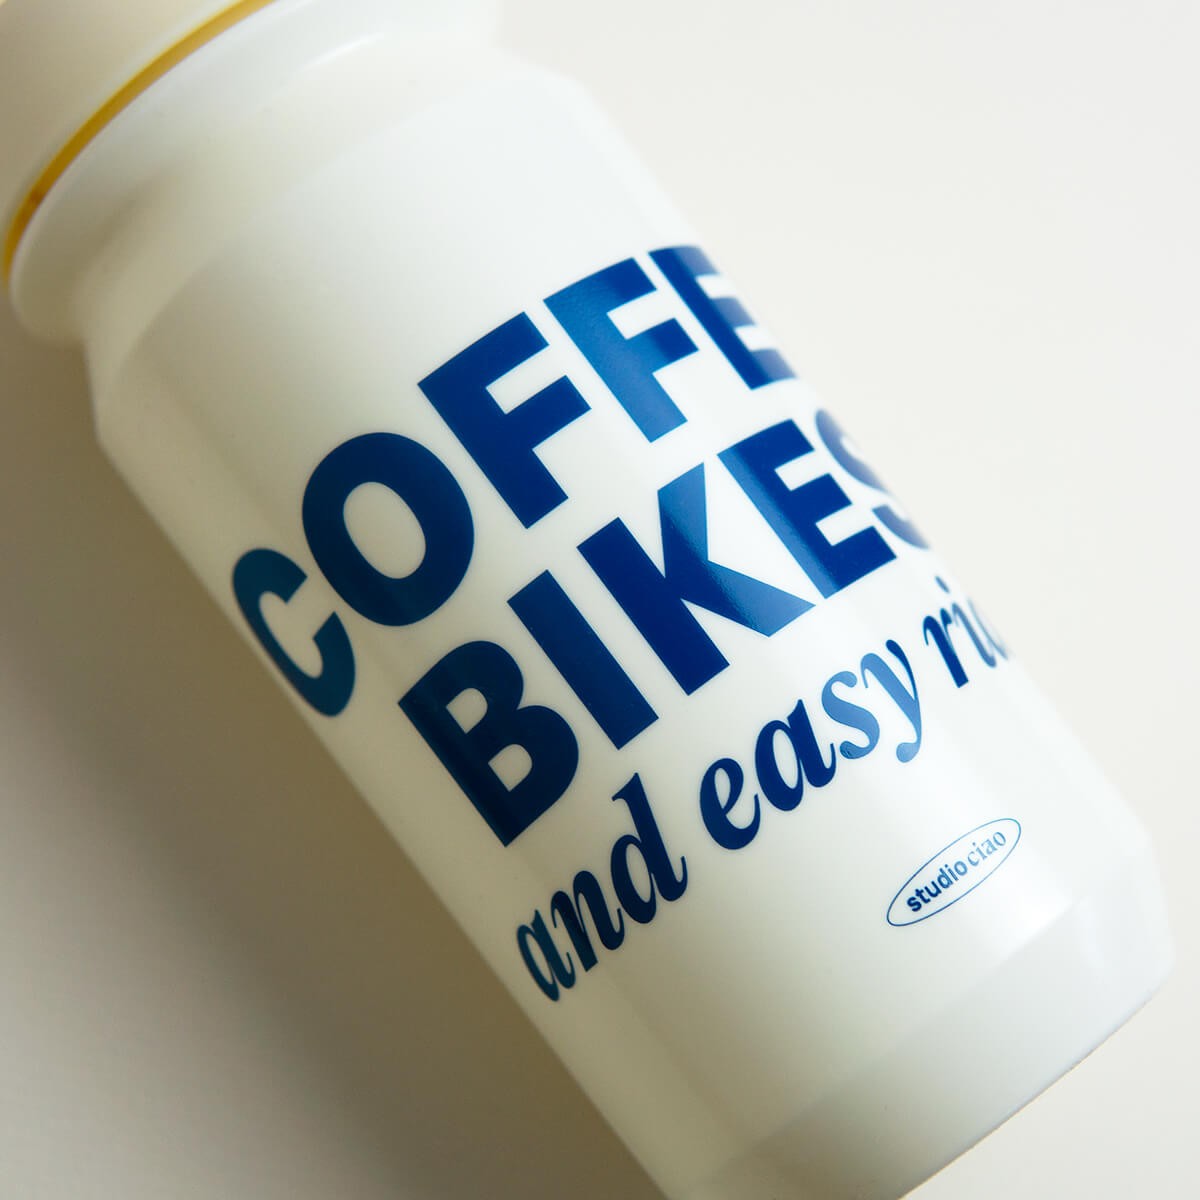 "COFFEE, BIKES & easy rides" Bidon, 500 ml Trinkflasche – studio ciao